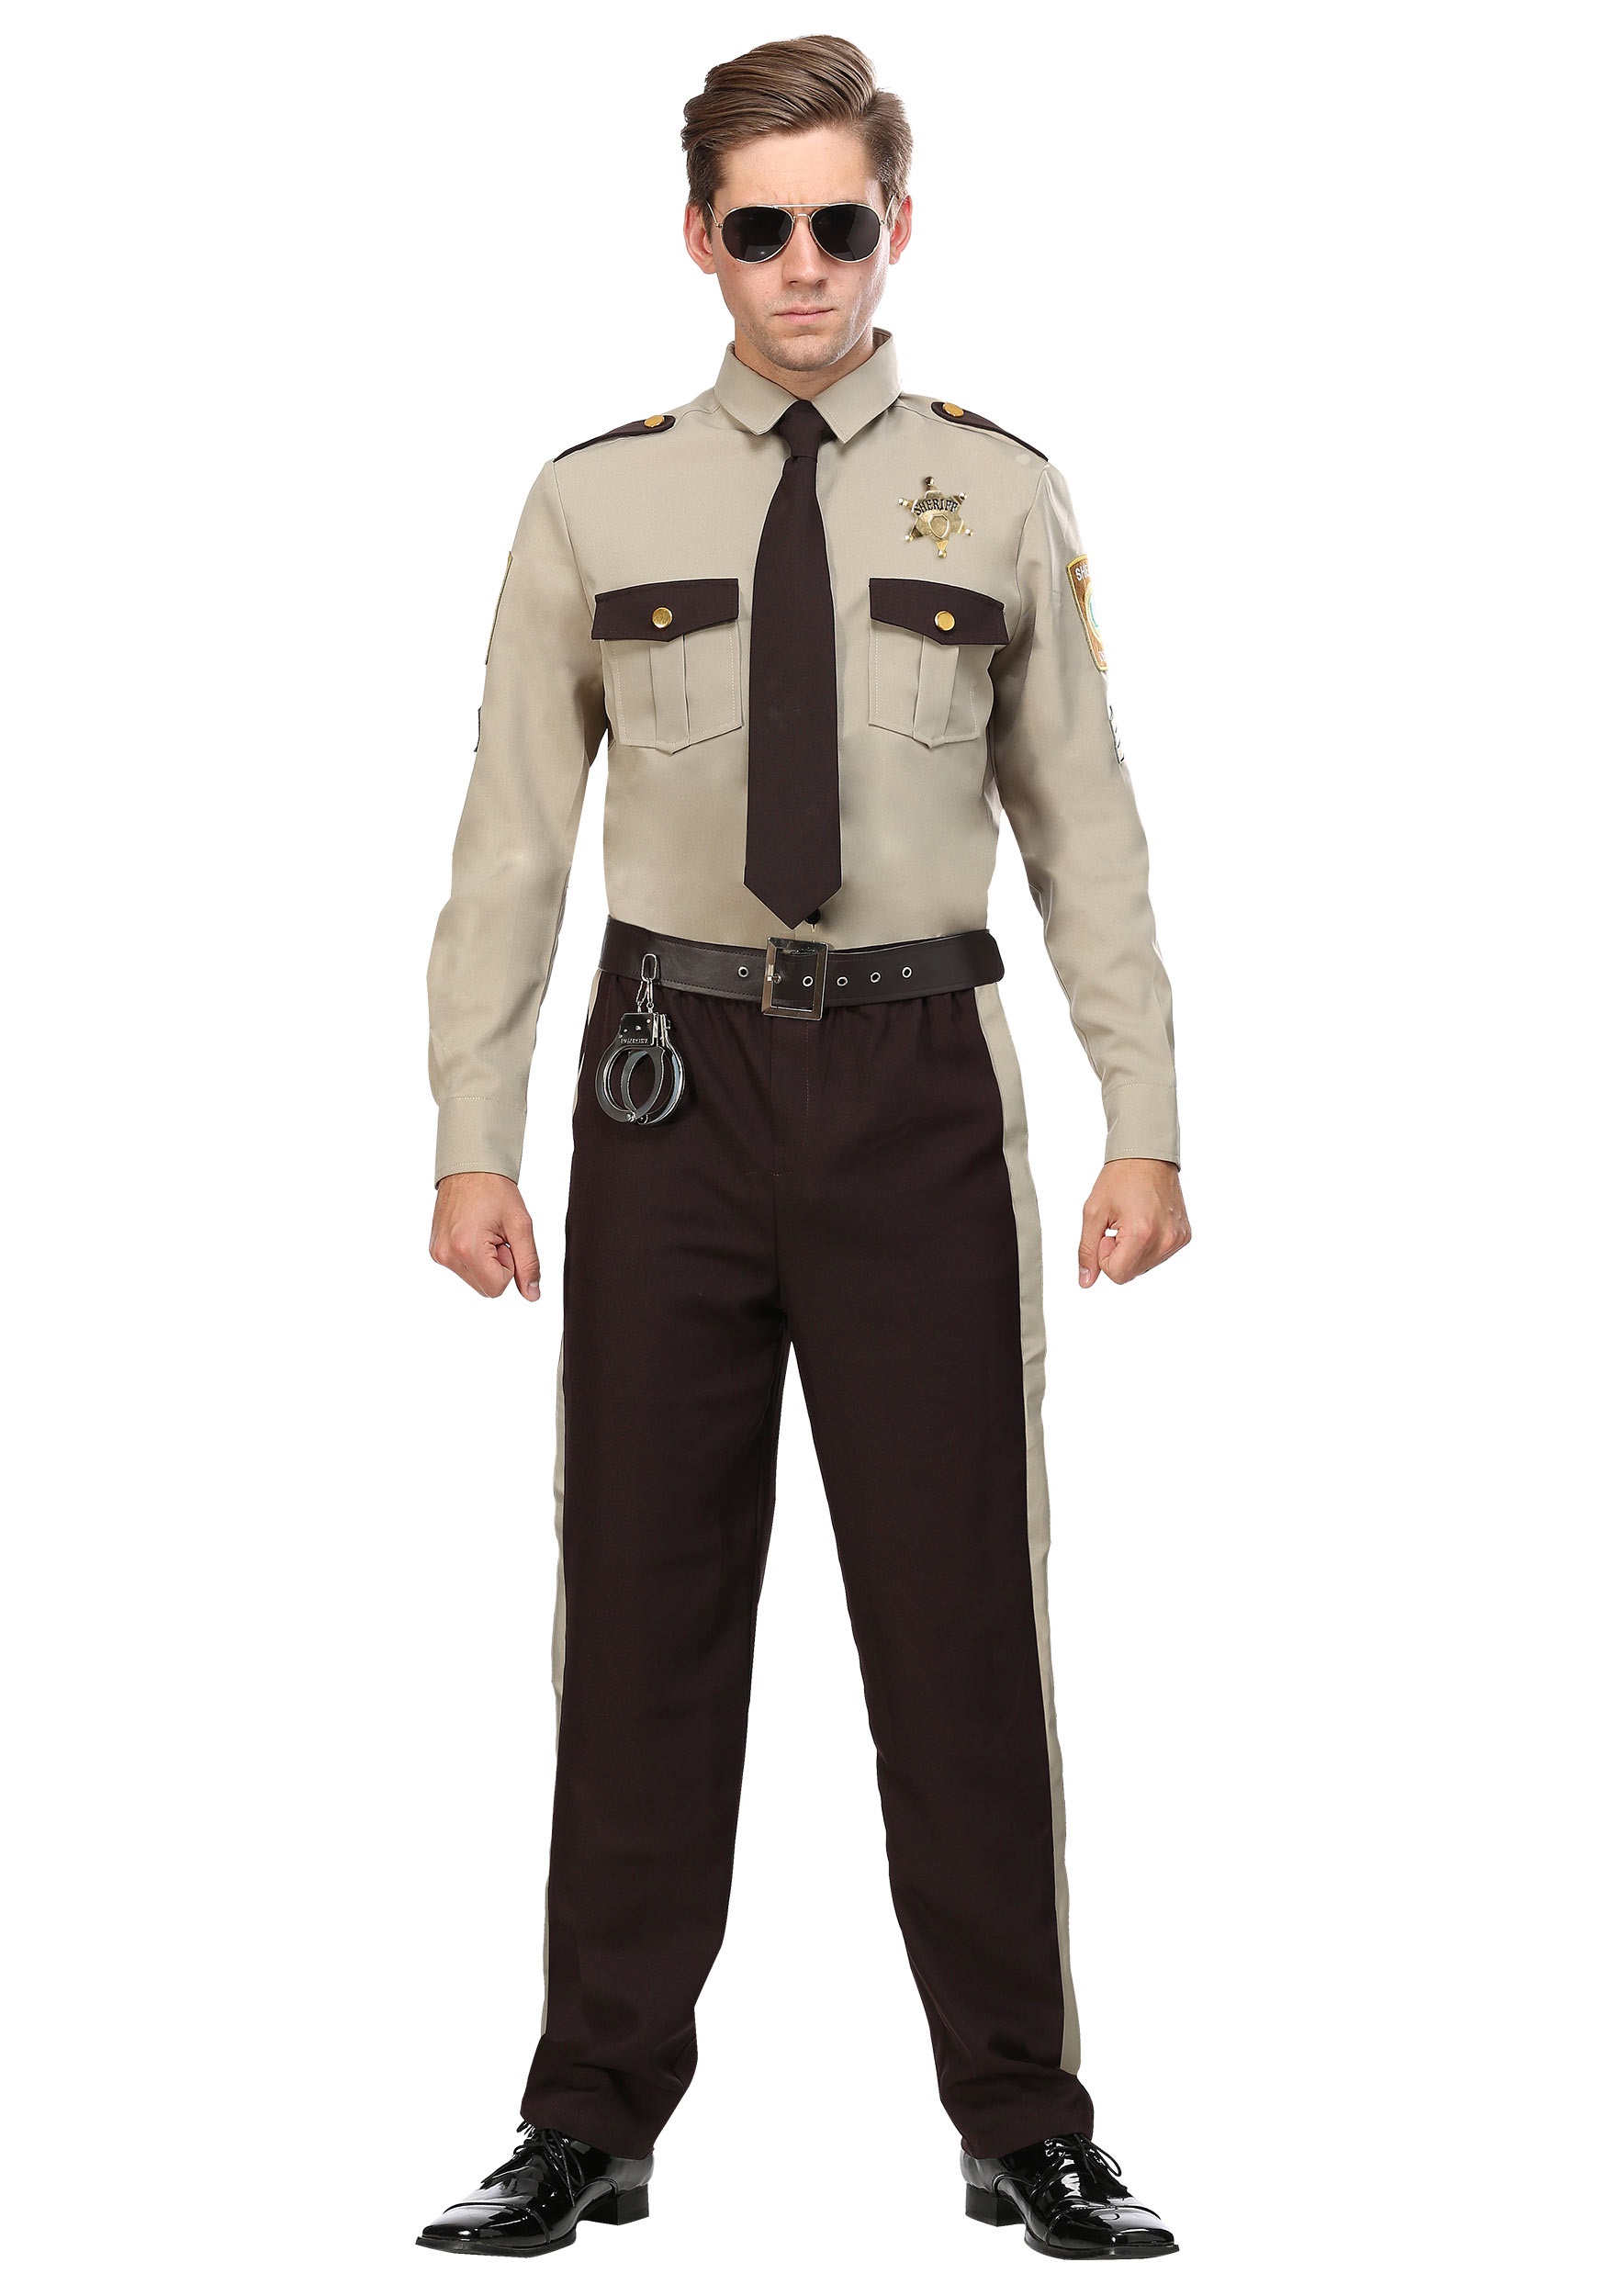 Men’s Sheriff Costume